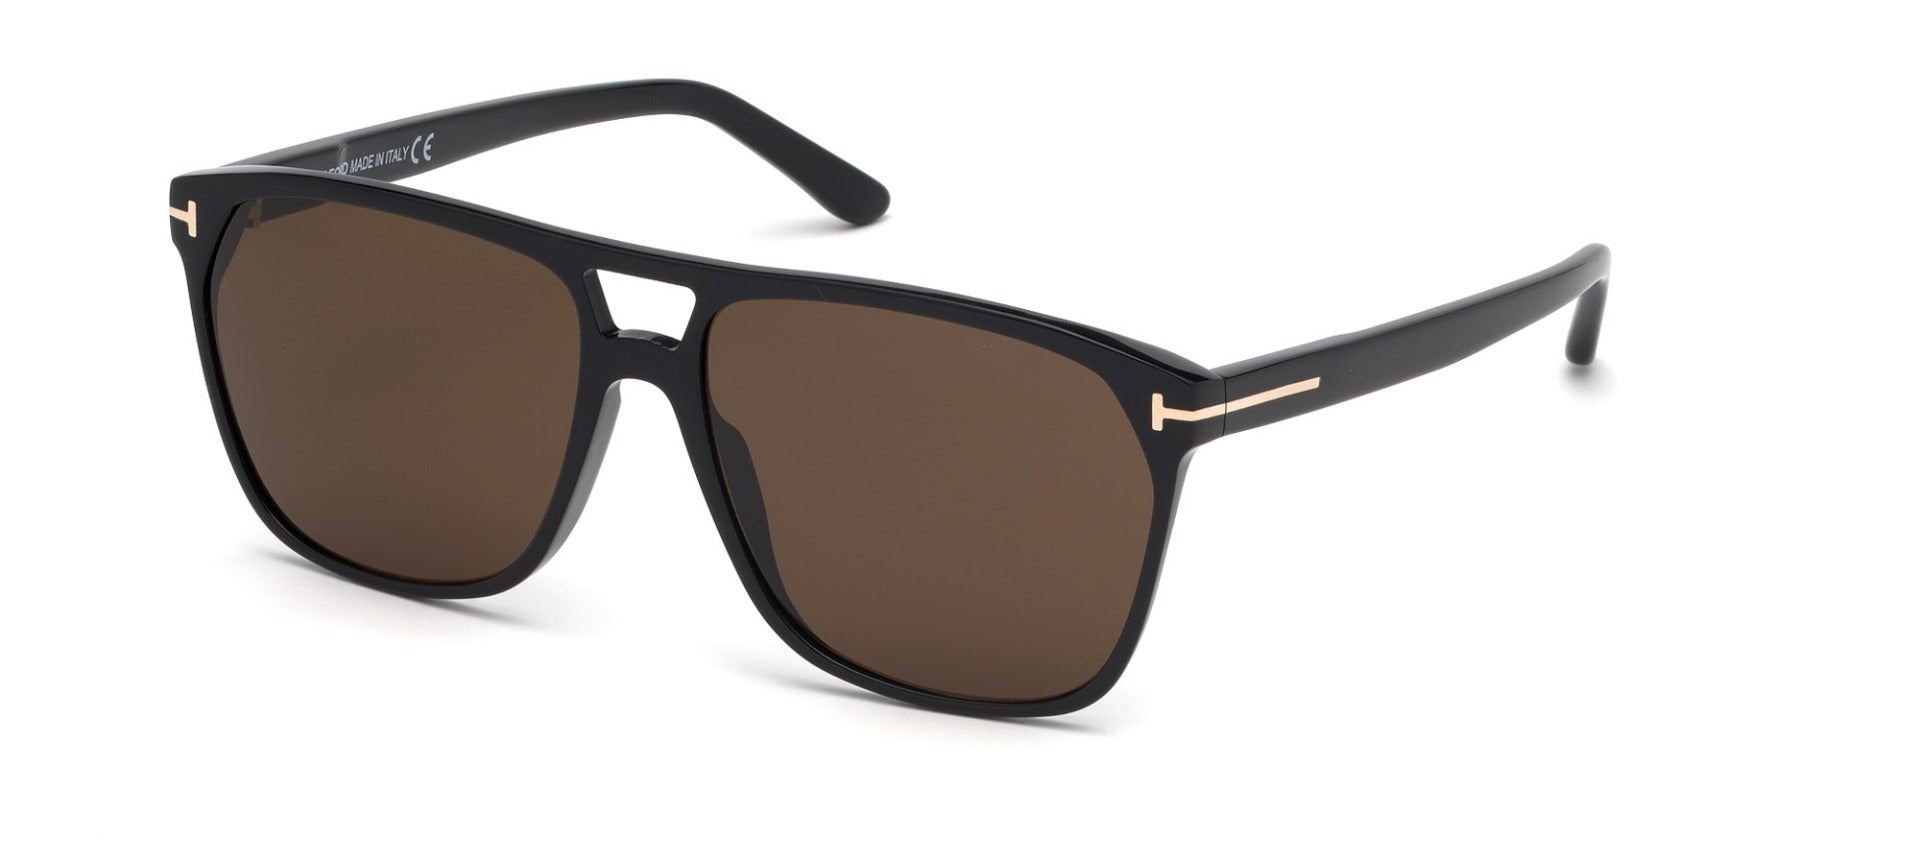 Tom Ford Shelton TF679 Sunglasses | Fashion Eyewear